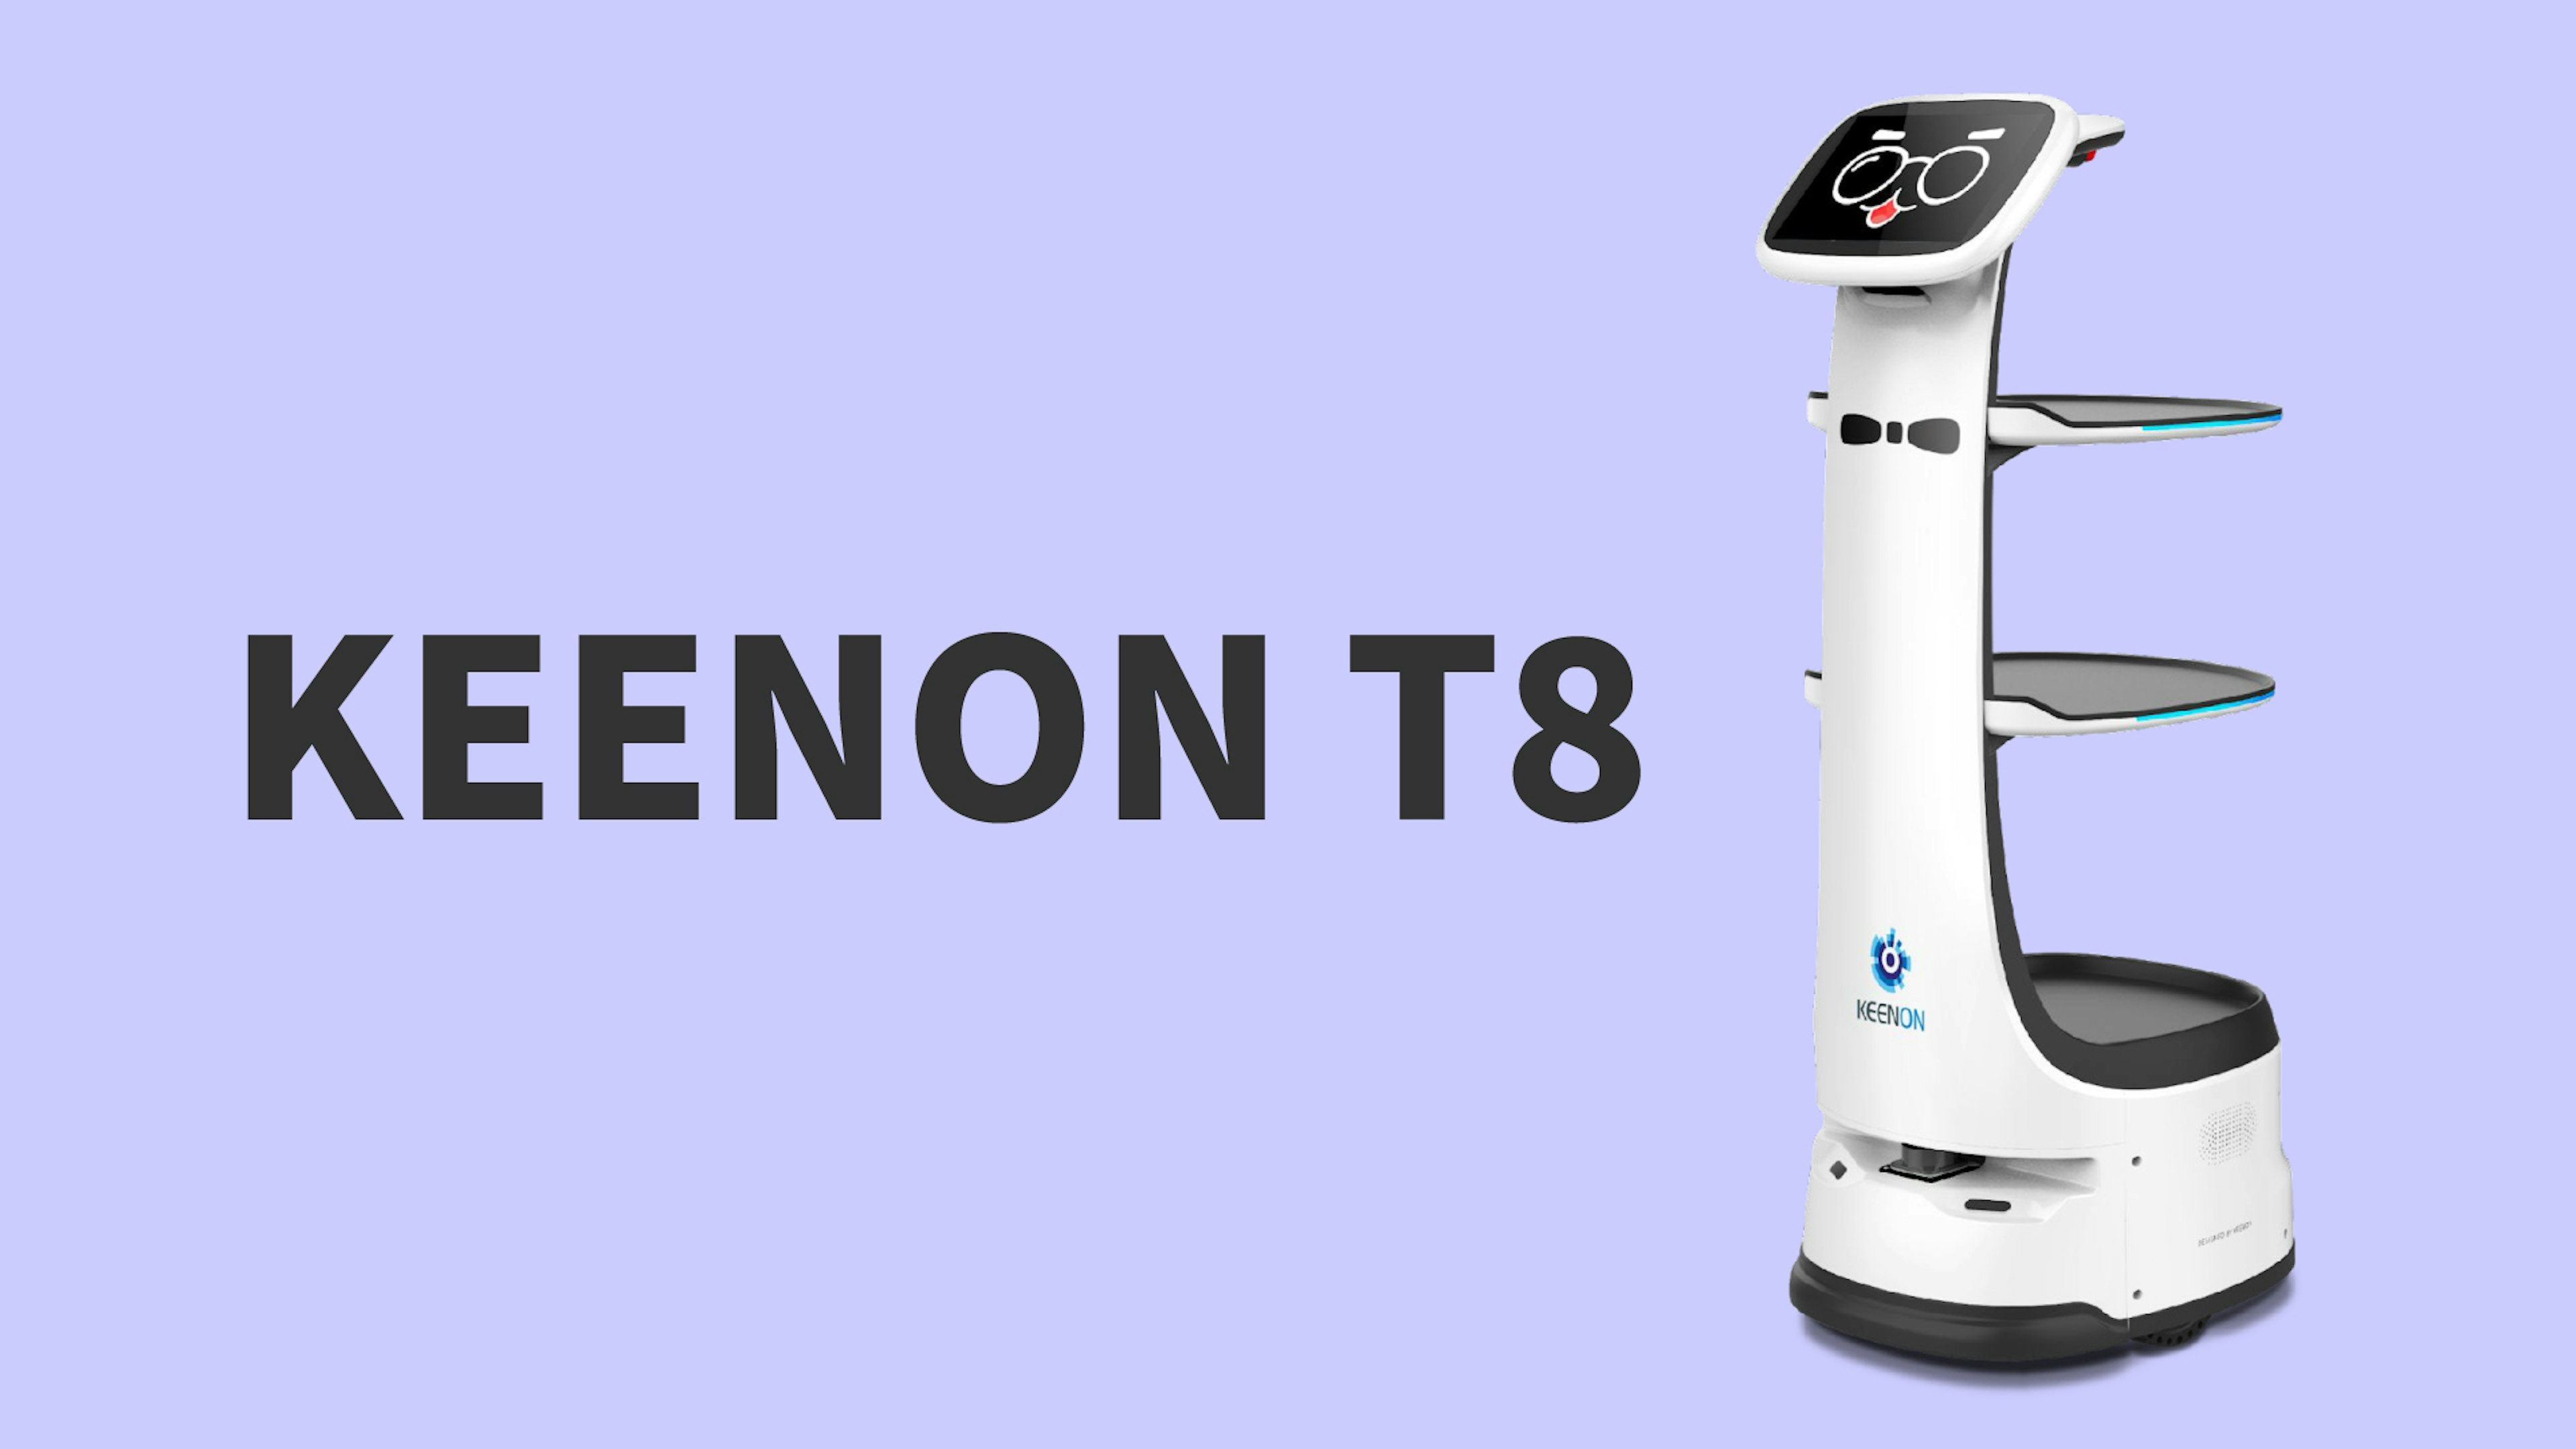 50cmの道幅も安全・正確に走行
配膳・運搬ロボット「KEENON T8」